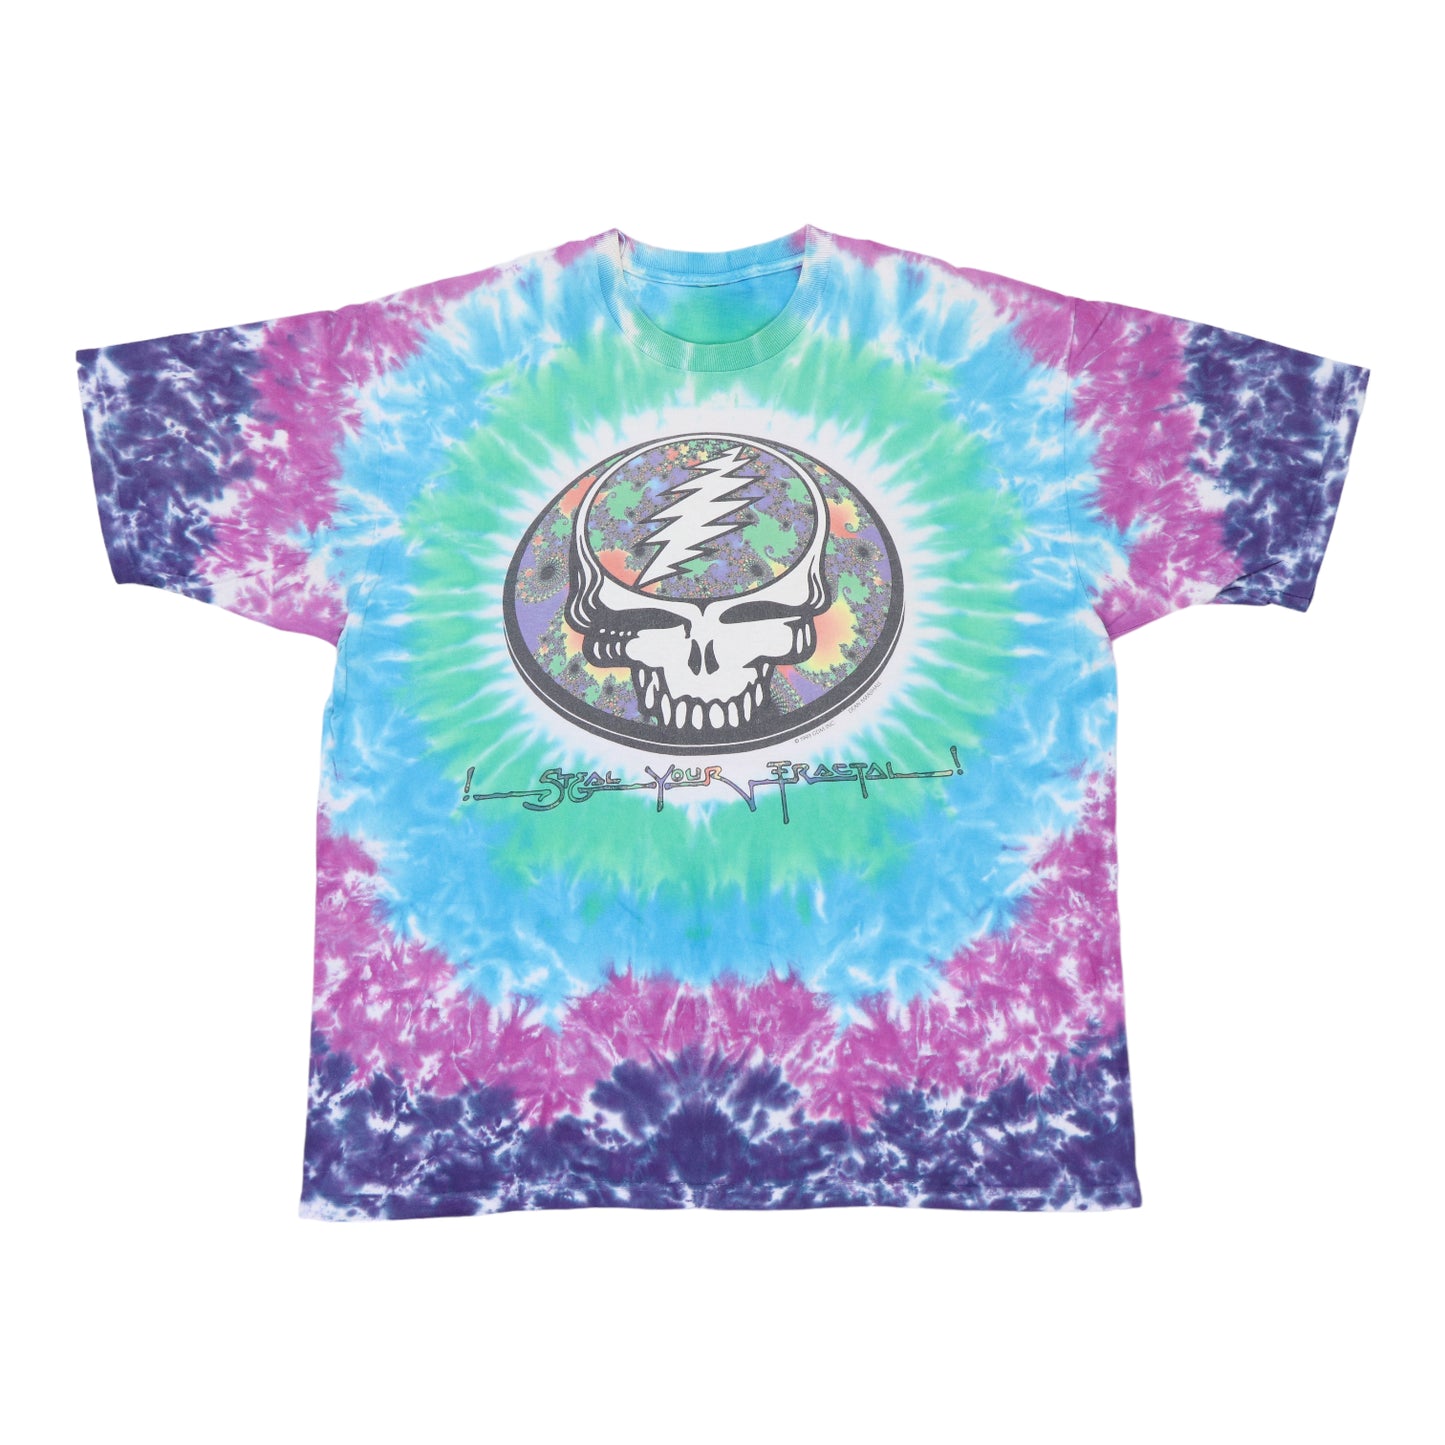 1993 Grateful Dead Steal Your Fractal Tie Dye Shirt